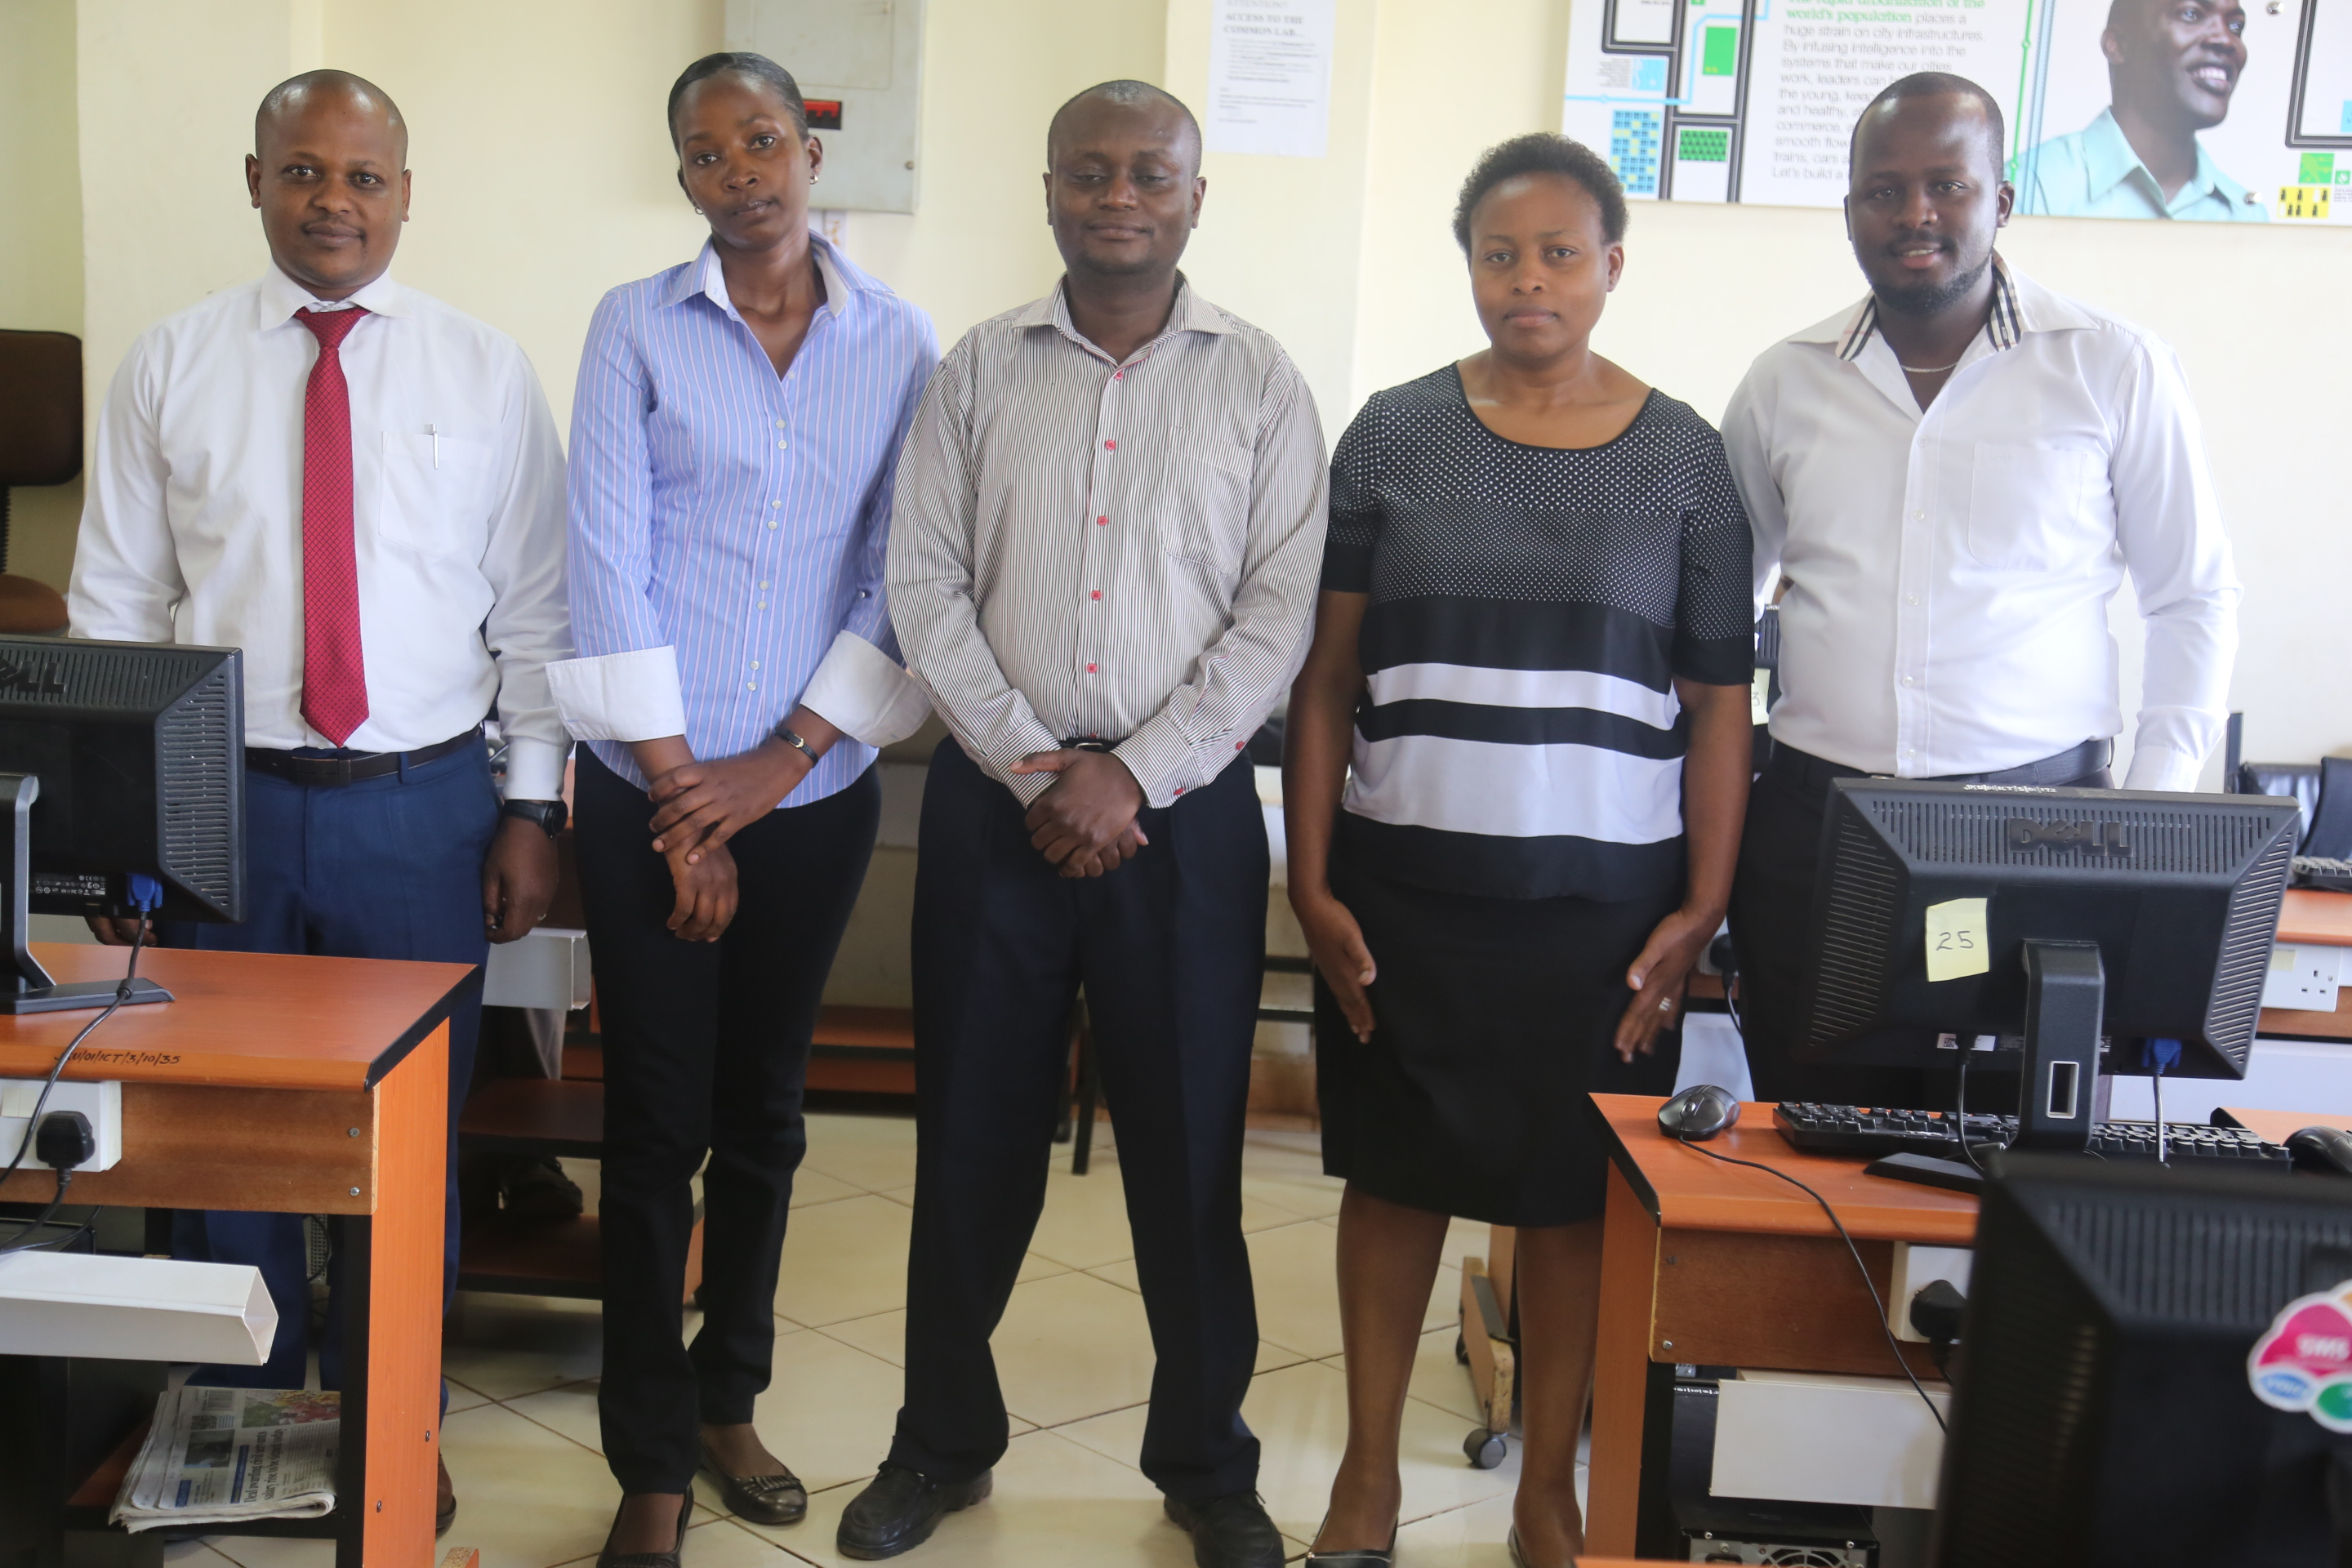 The RCT Team, from left; HOD Mr. Kibe Mburu, Ms. Phyllis Ngigi, Ms. Carolyne Wambugu and Mr. Michael Waititu